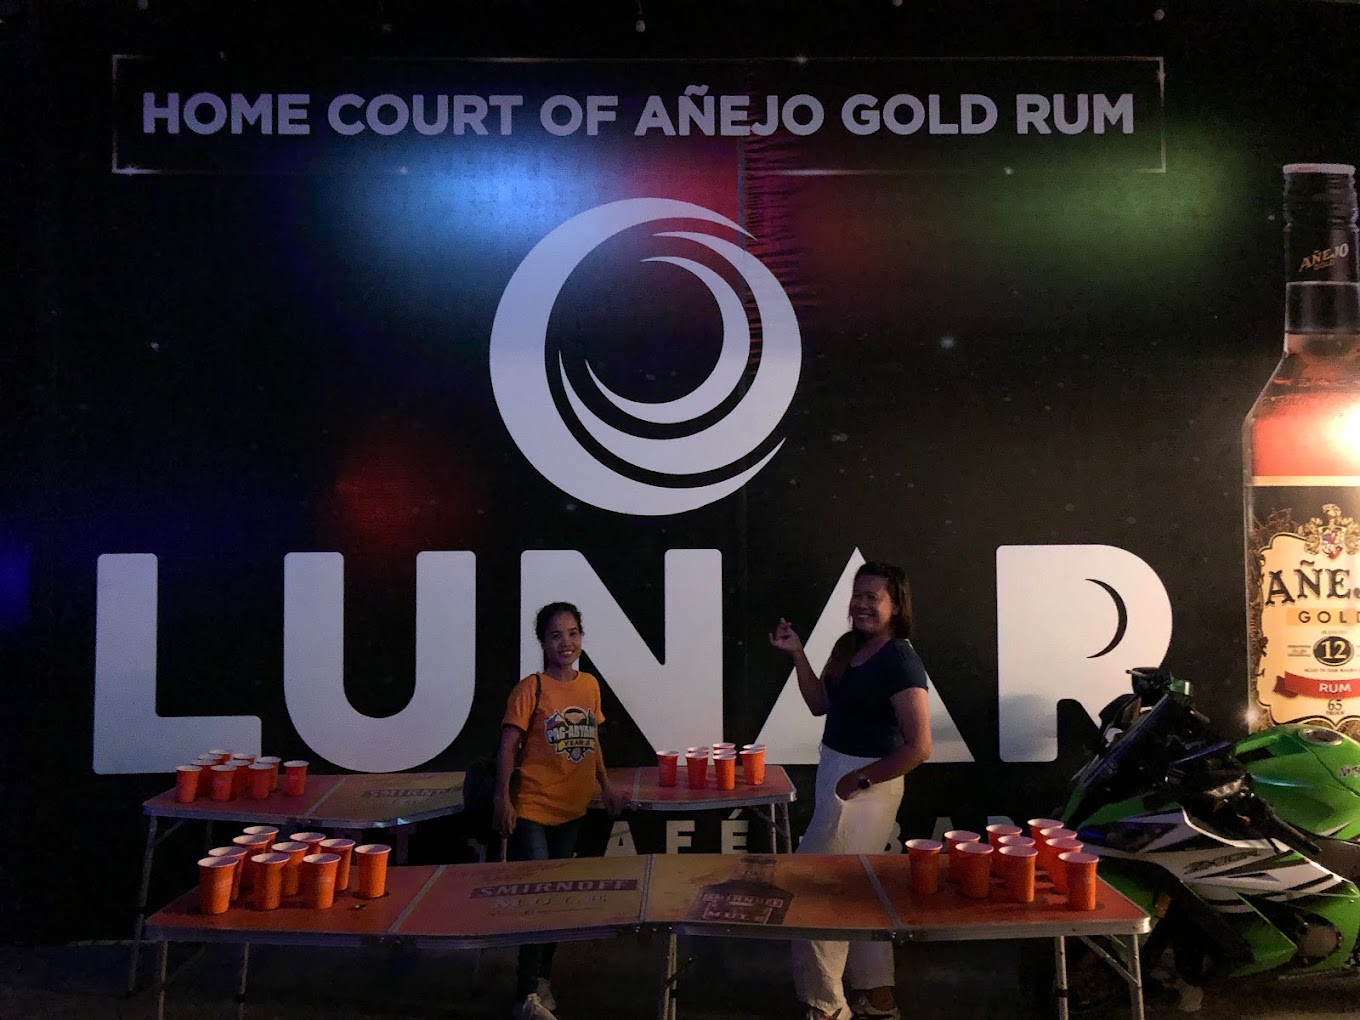 Lunar: Art, Cafe and Bar